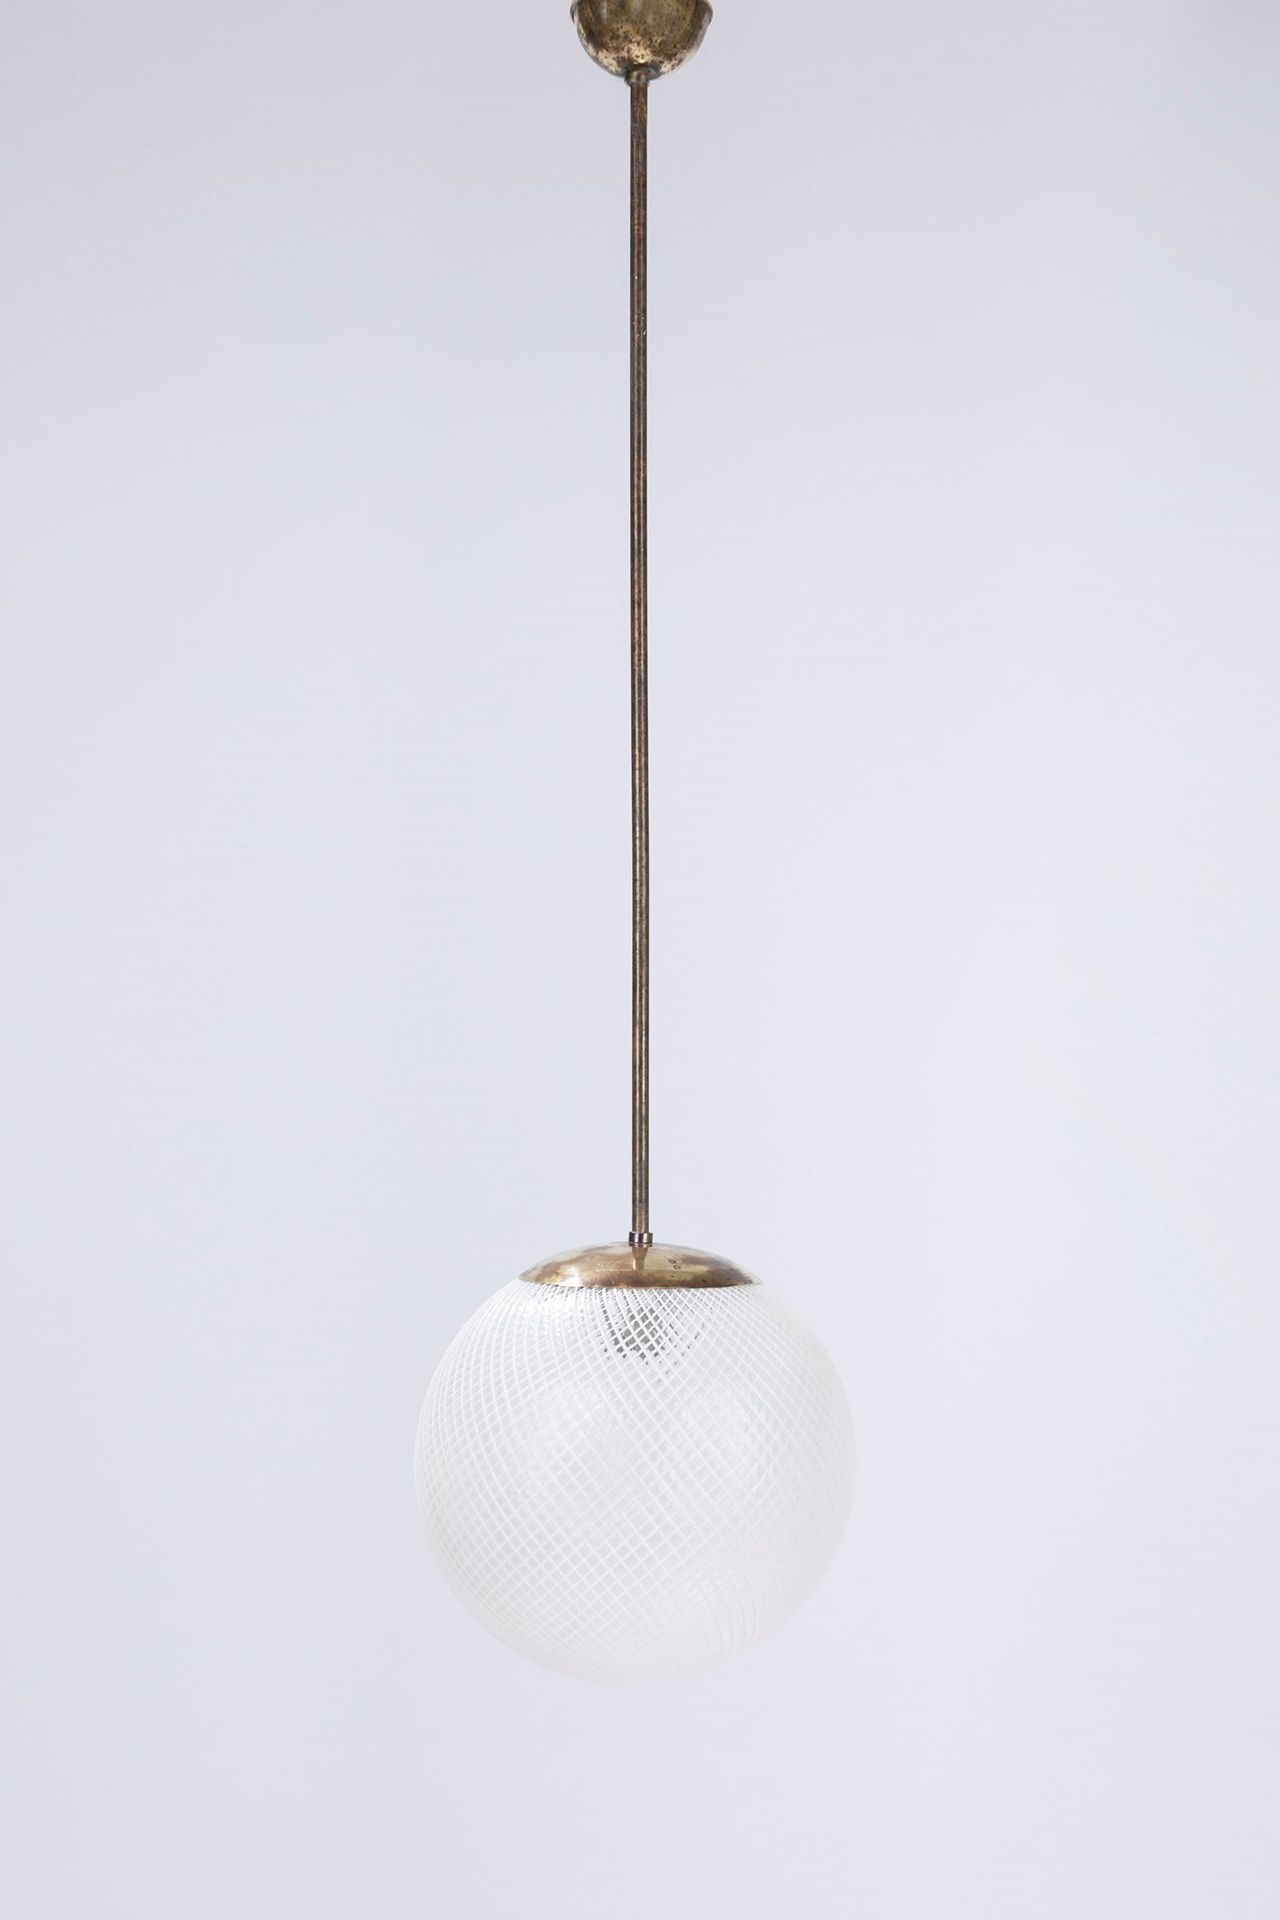 CARLO SCARPA 吊灯，1930年左右

Diam 30
reticello玻璃和金属结构。

威尼尼制造